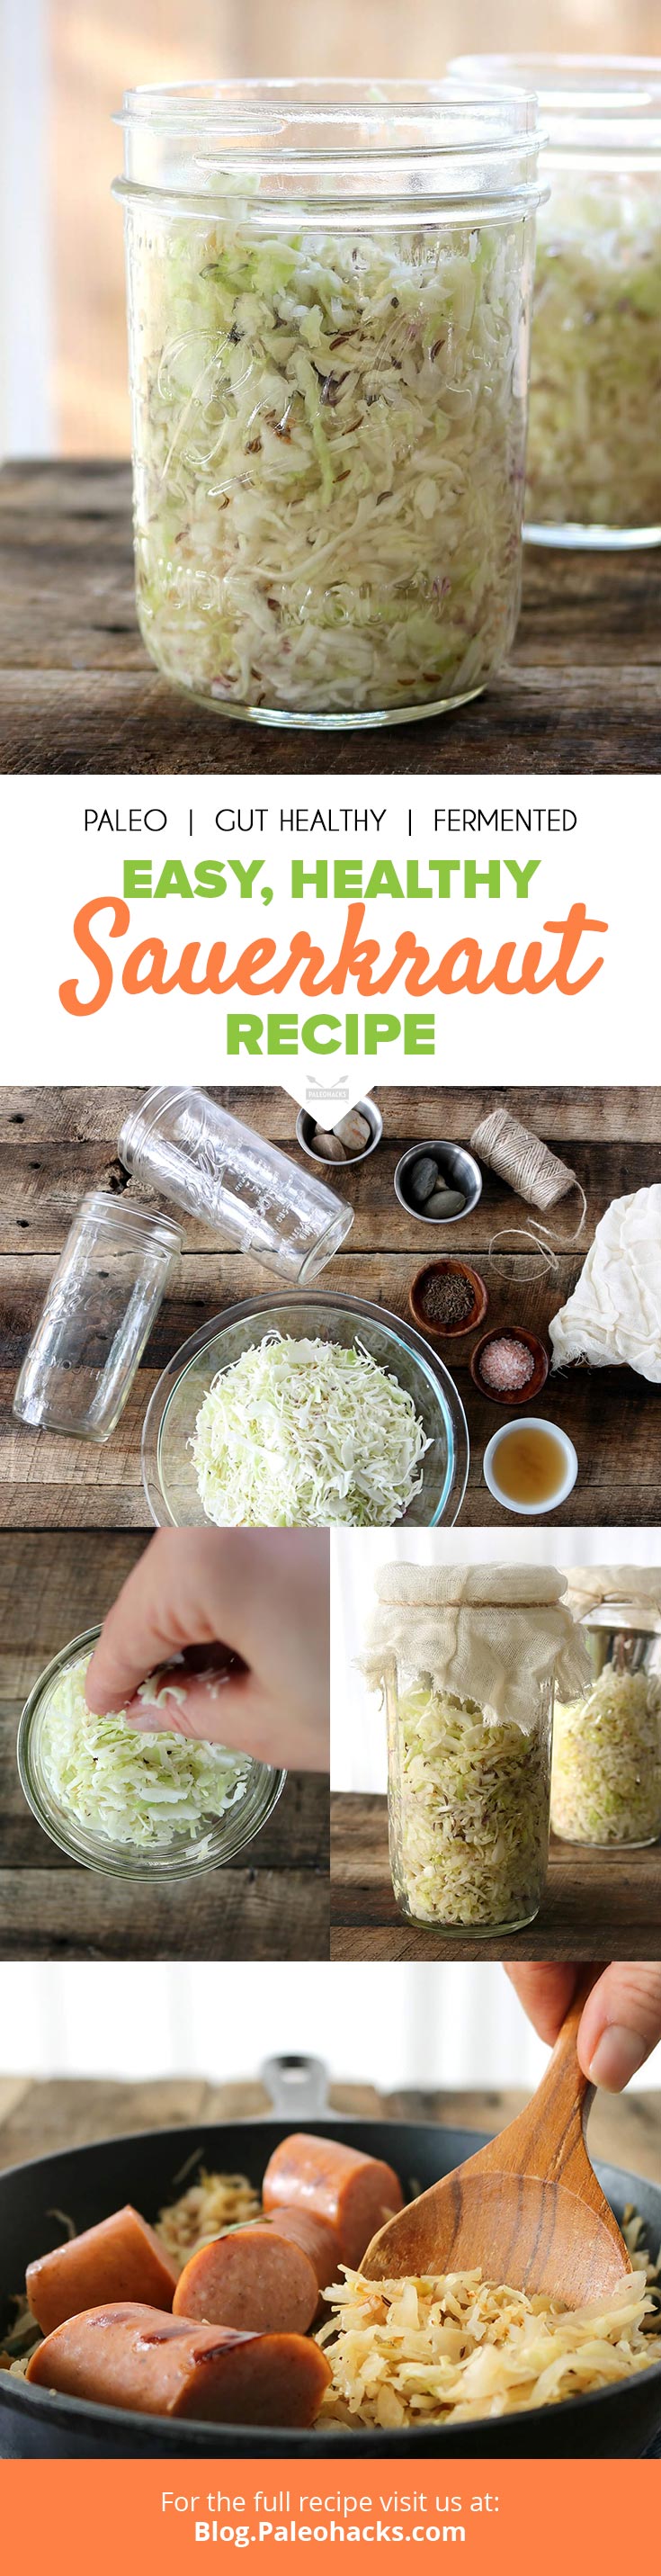 How to make sauerkraut 